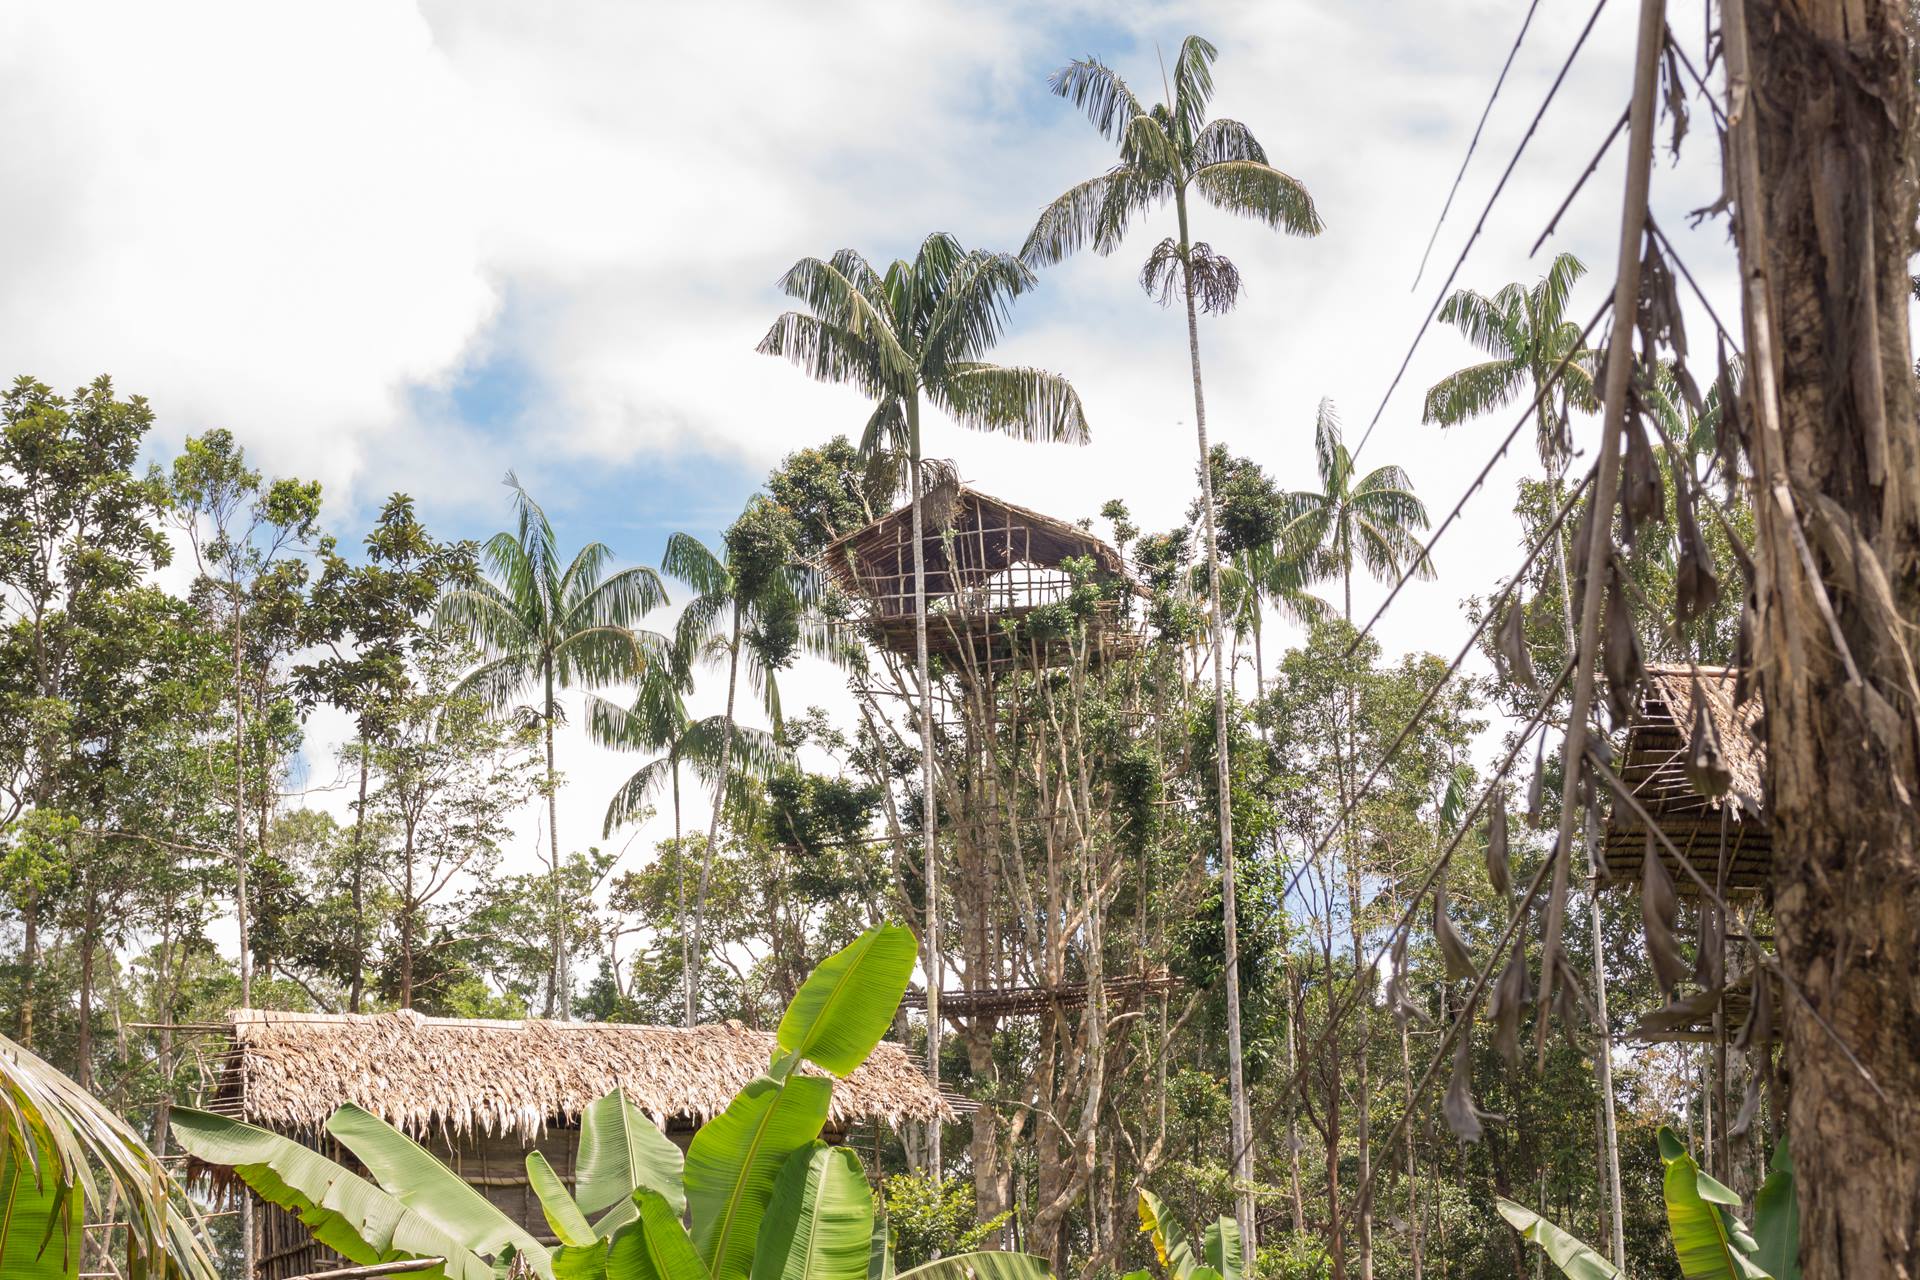 Korowai build huts on tree follage